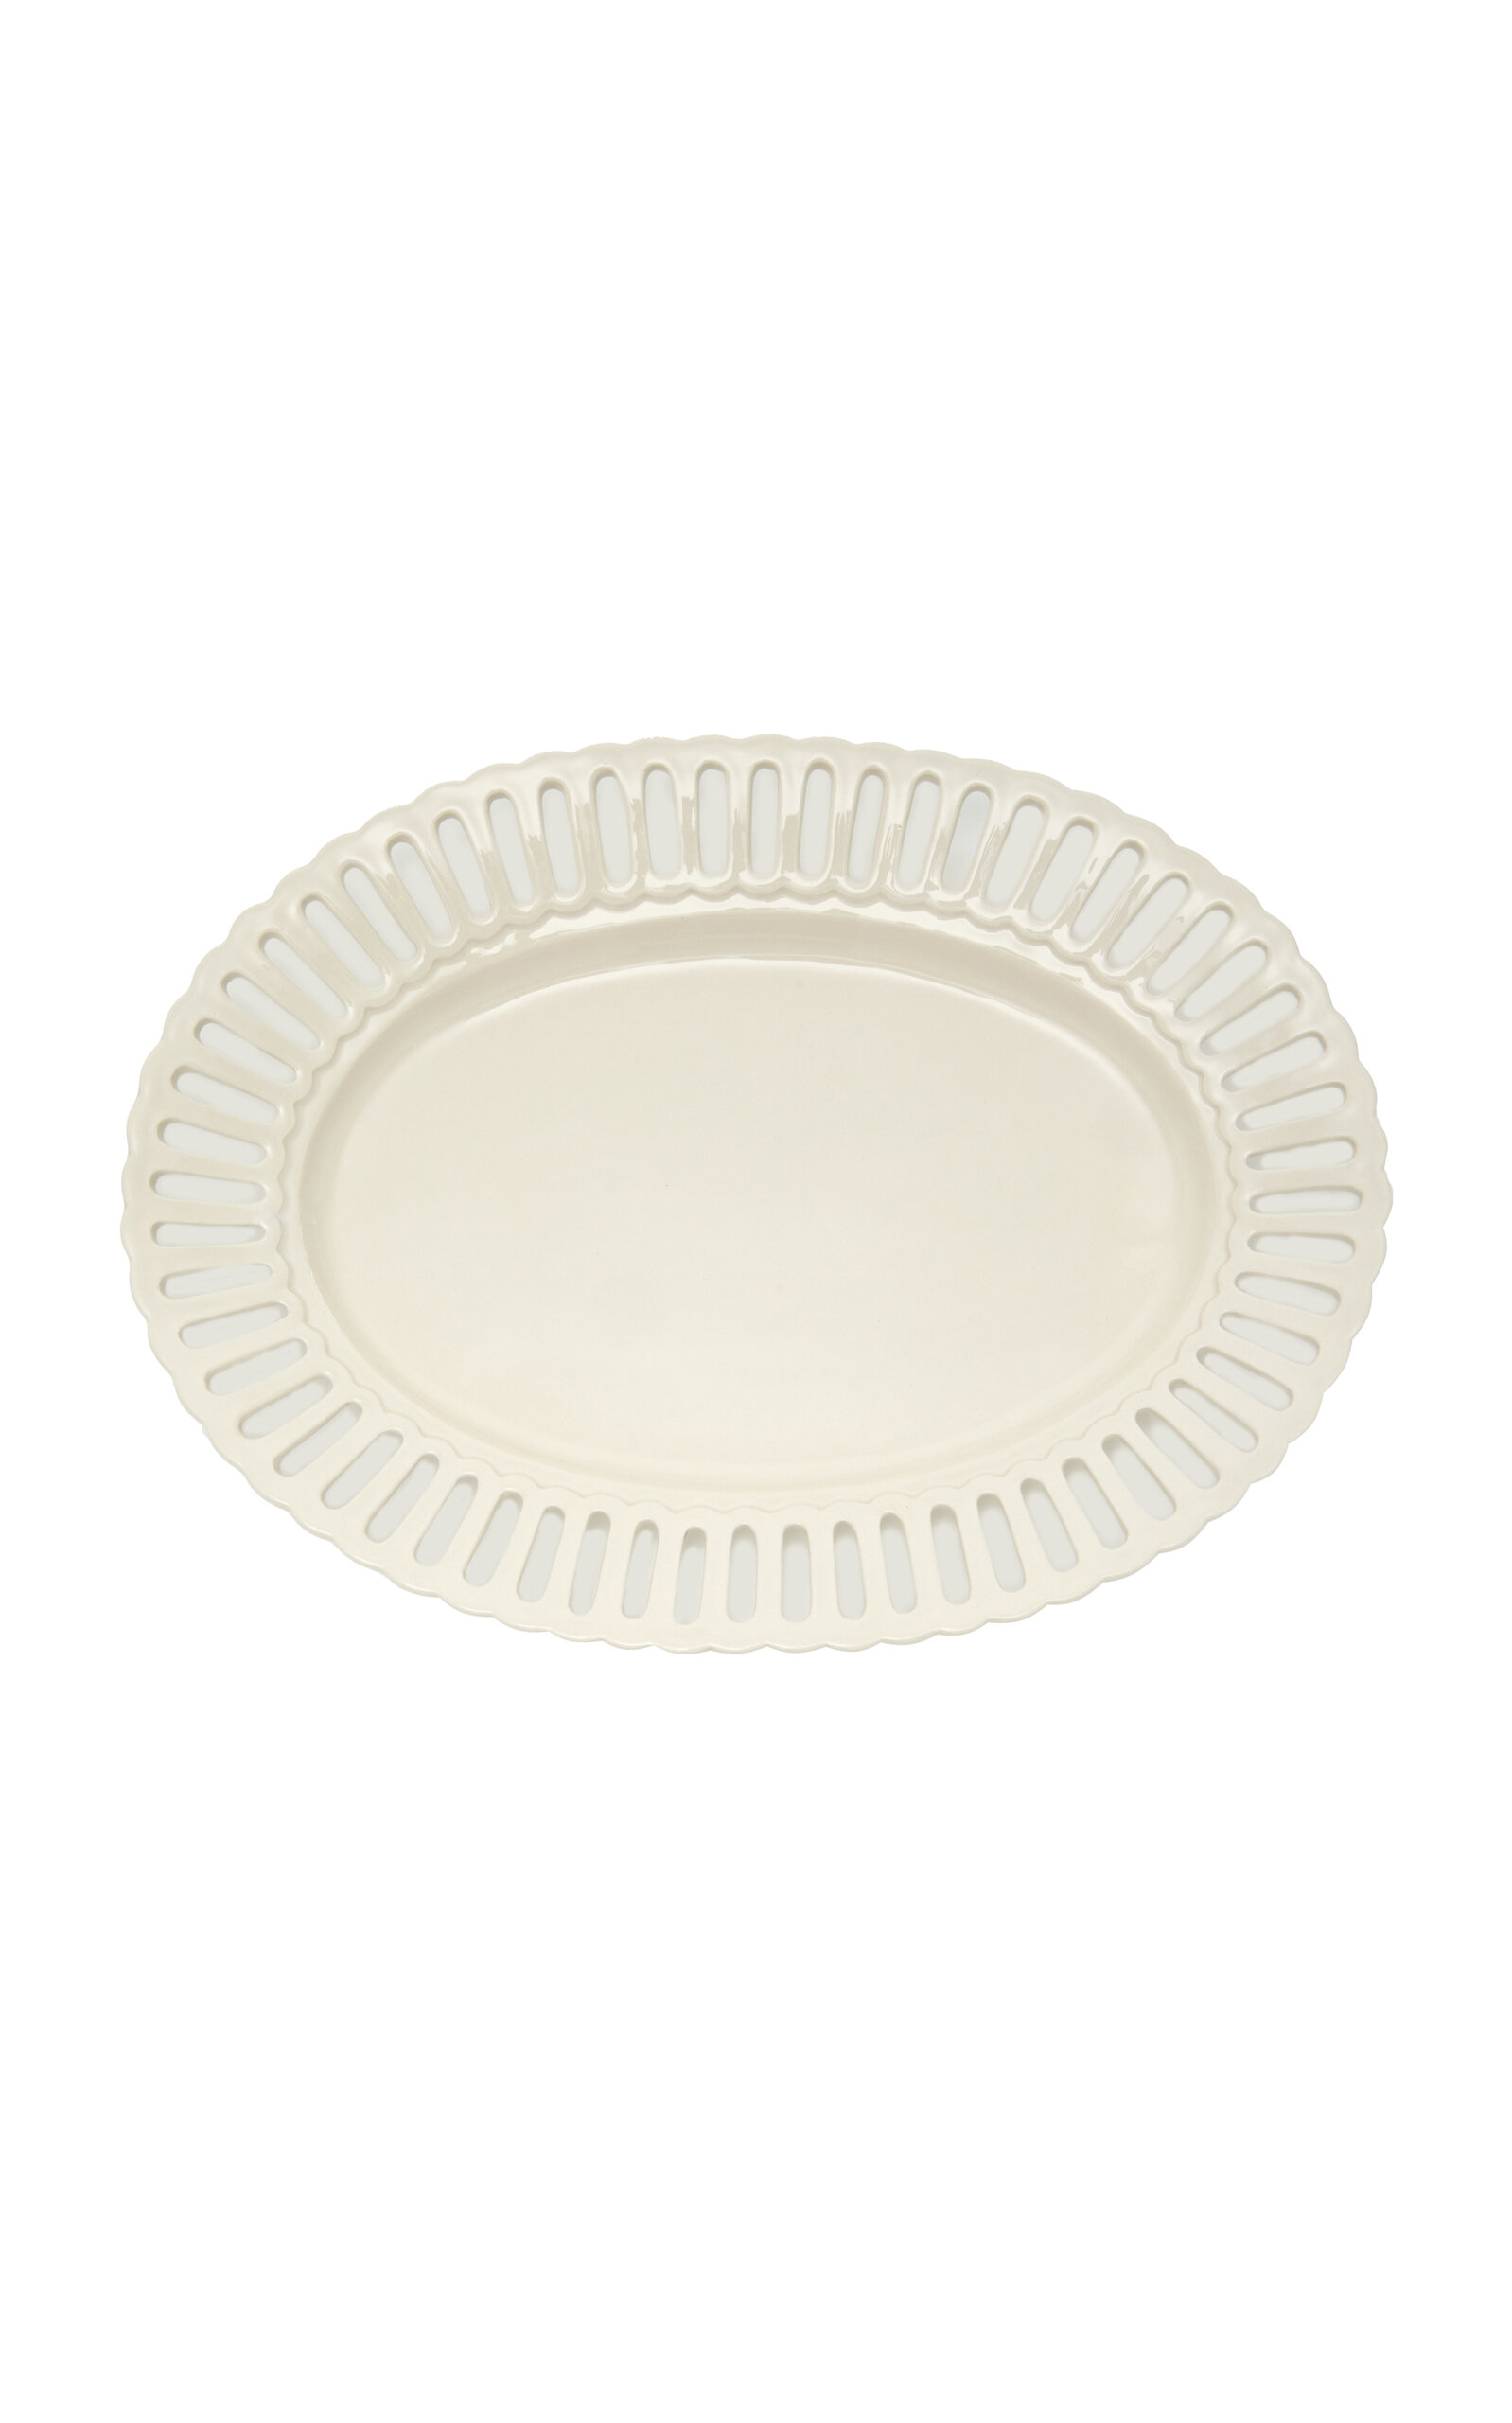 Moda Domus Balconata Creamware Serving Tray In White